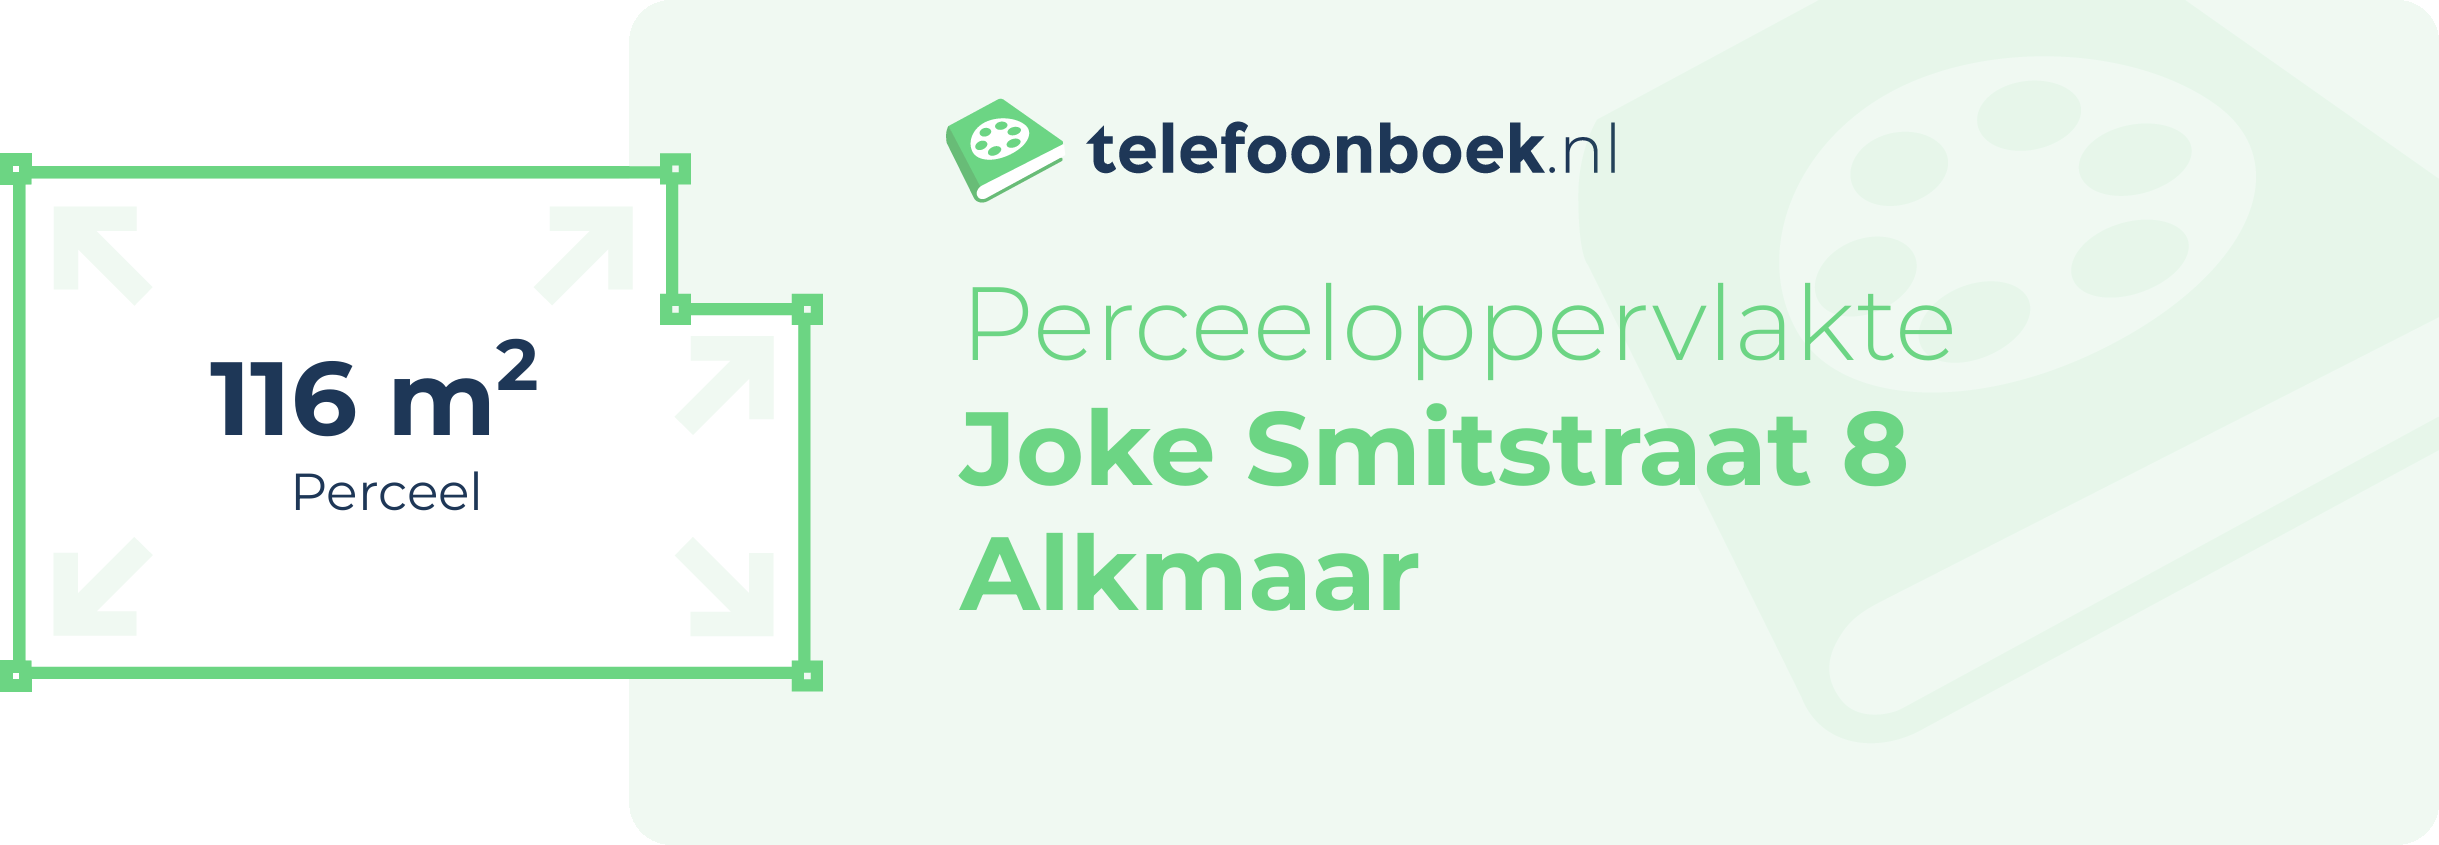 Perceeloppervlakte Joke Smitstraat 8 Alkmaar